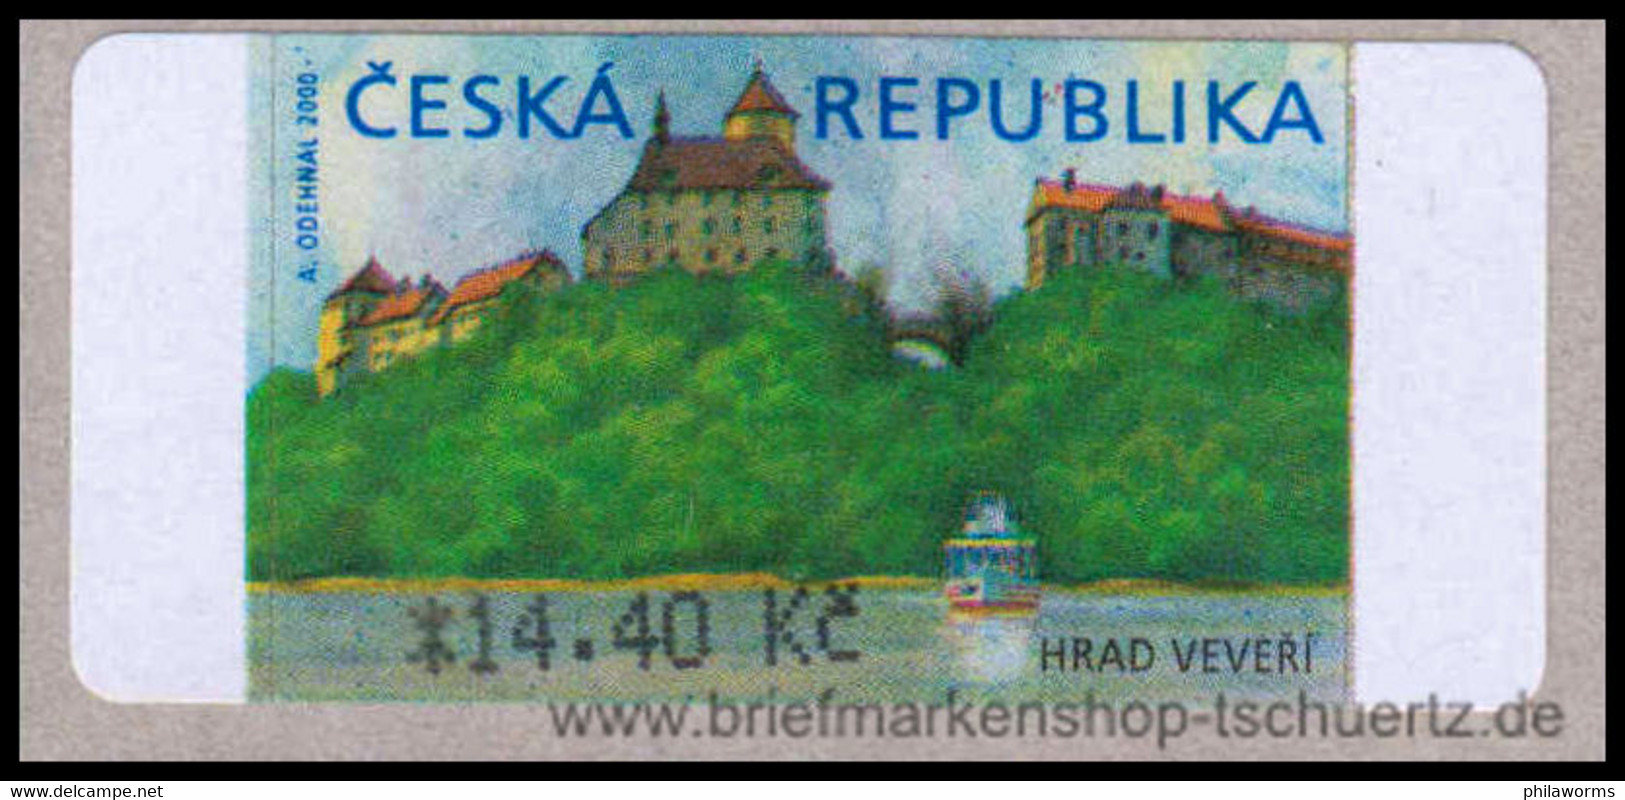 Tschechien 2000, Mi. ATM 1.2 e S6 **